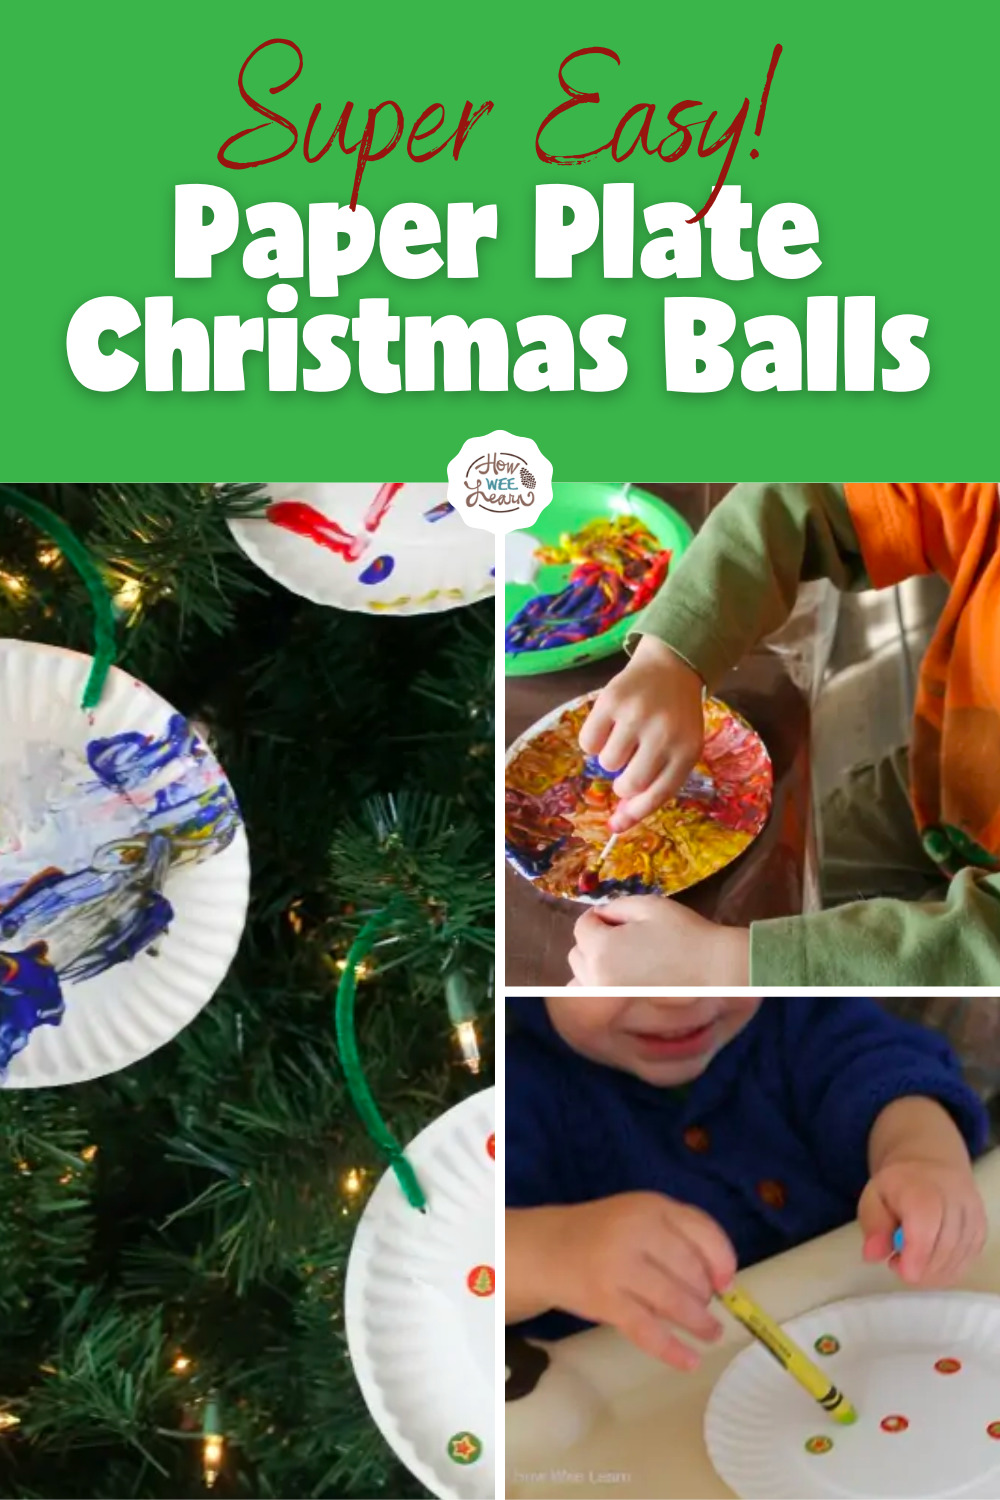 Super Easy Paper Plate Christmas Balls for Preschoolers